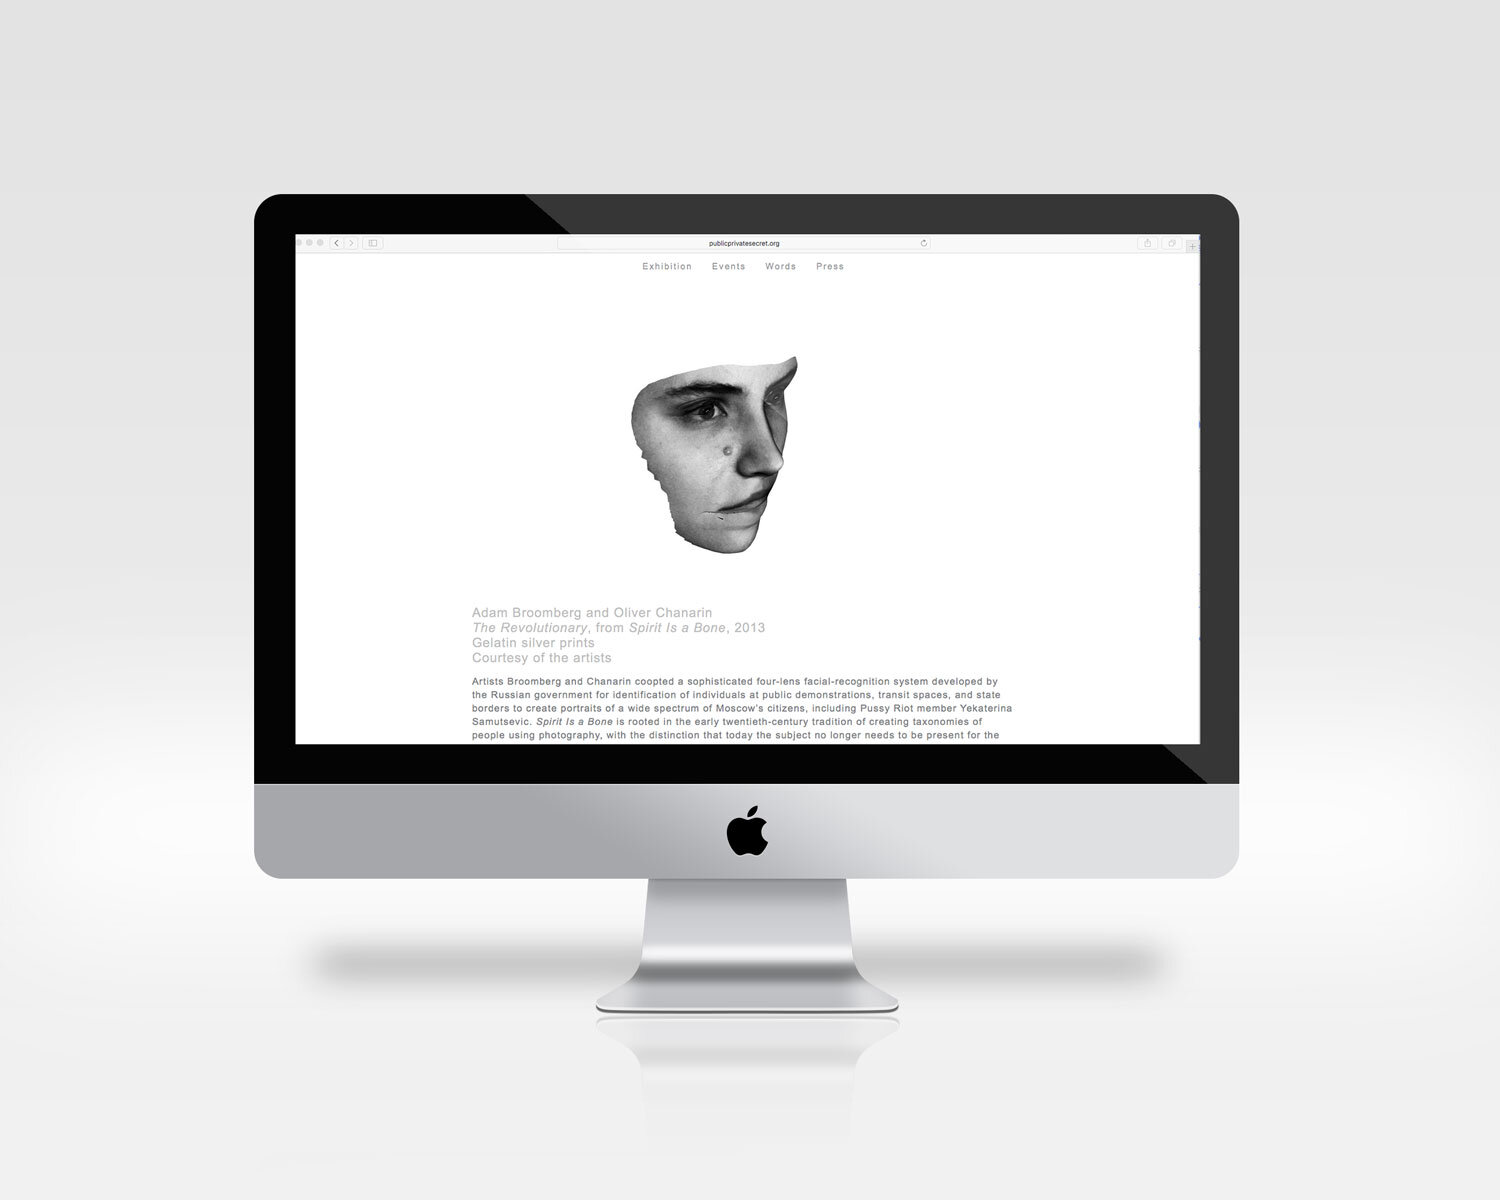 iMac-psd-mockup-pps-3-face.jpg